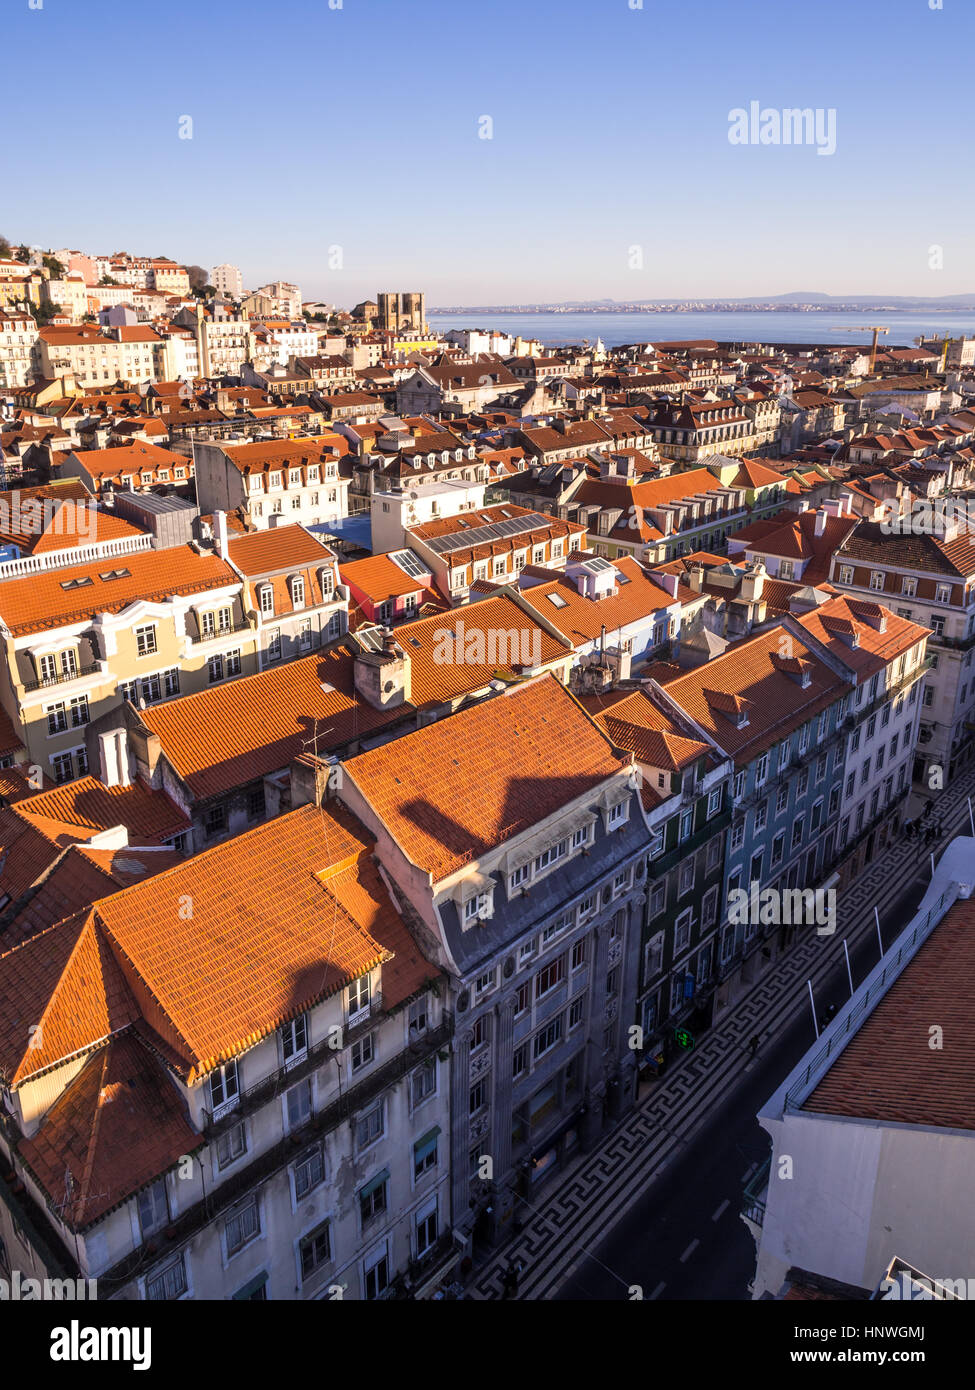 LISBON, PORTUGAL - JANUARY 10, 2017: Cityscape of Lisbon as seen from Miradouro do Elevador de Santa Justa (view point at the top of Santa Justa Eleva Stock Photo